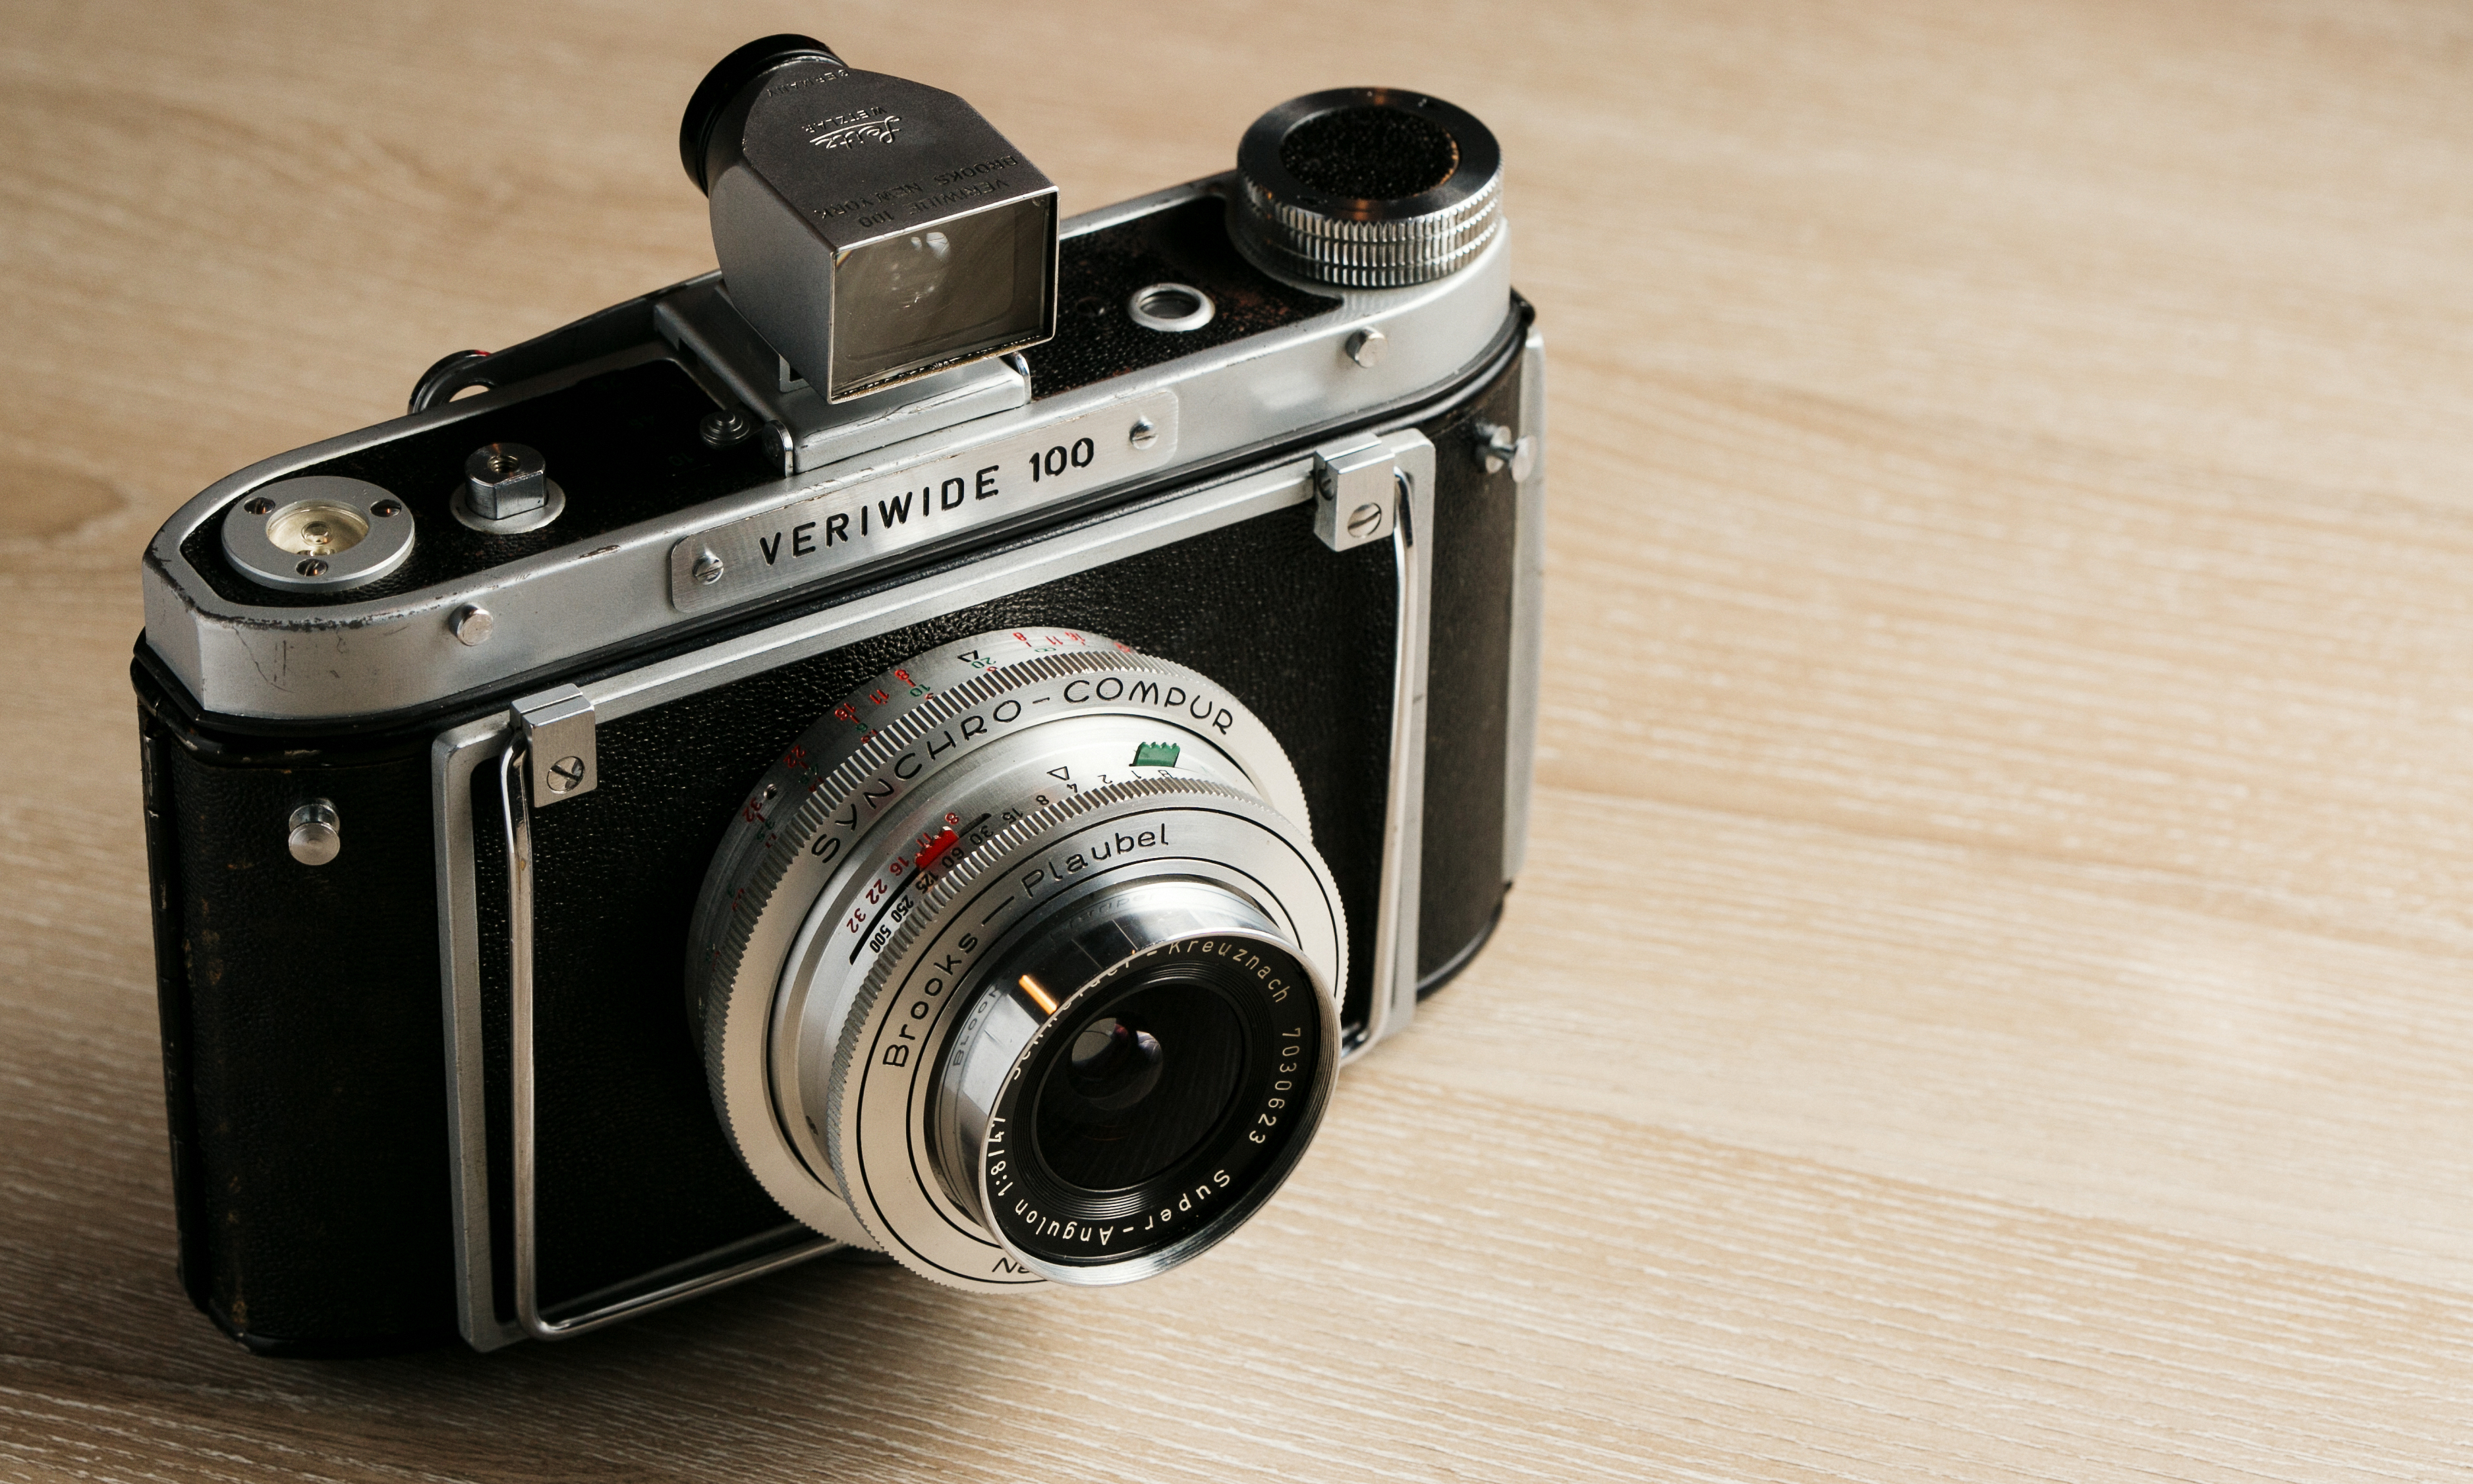 Brooks-Plaubel Veriwide 100 camera with Schneider-Kreuznach Super-Angulon 47mm f8 lens